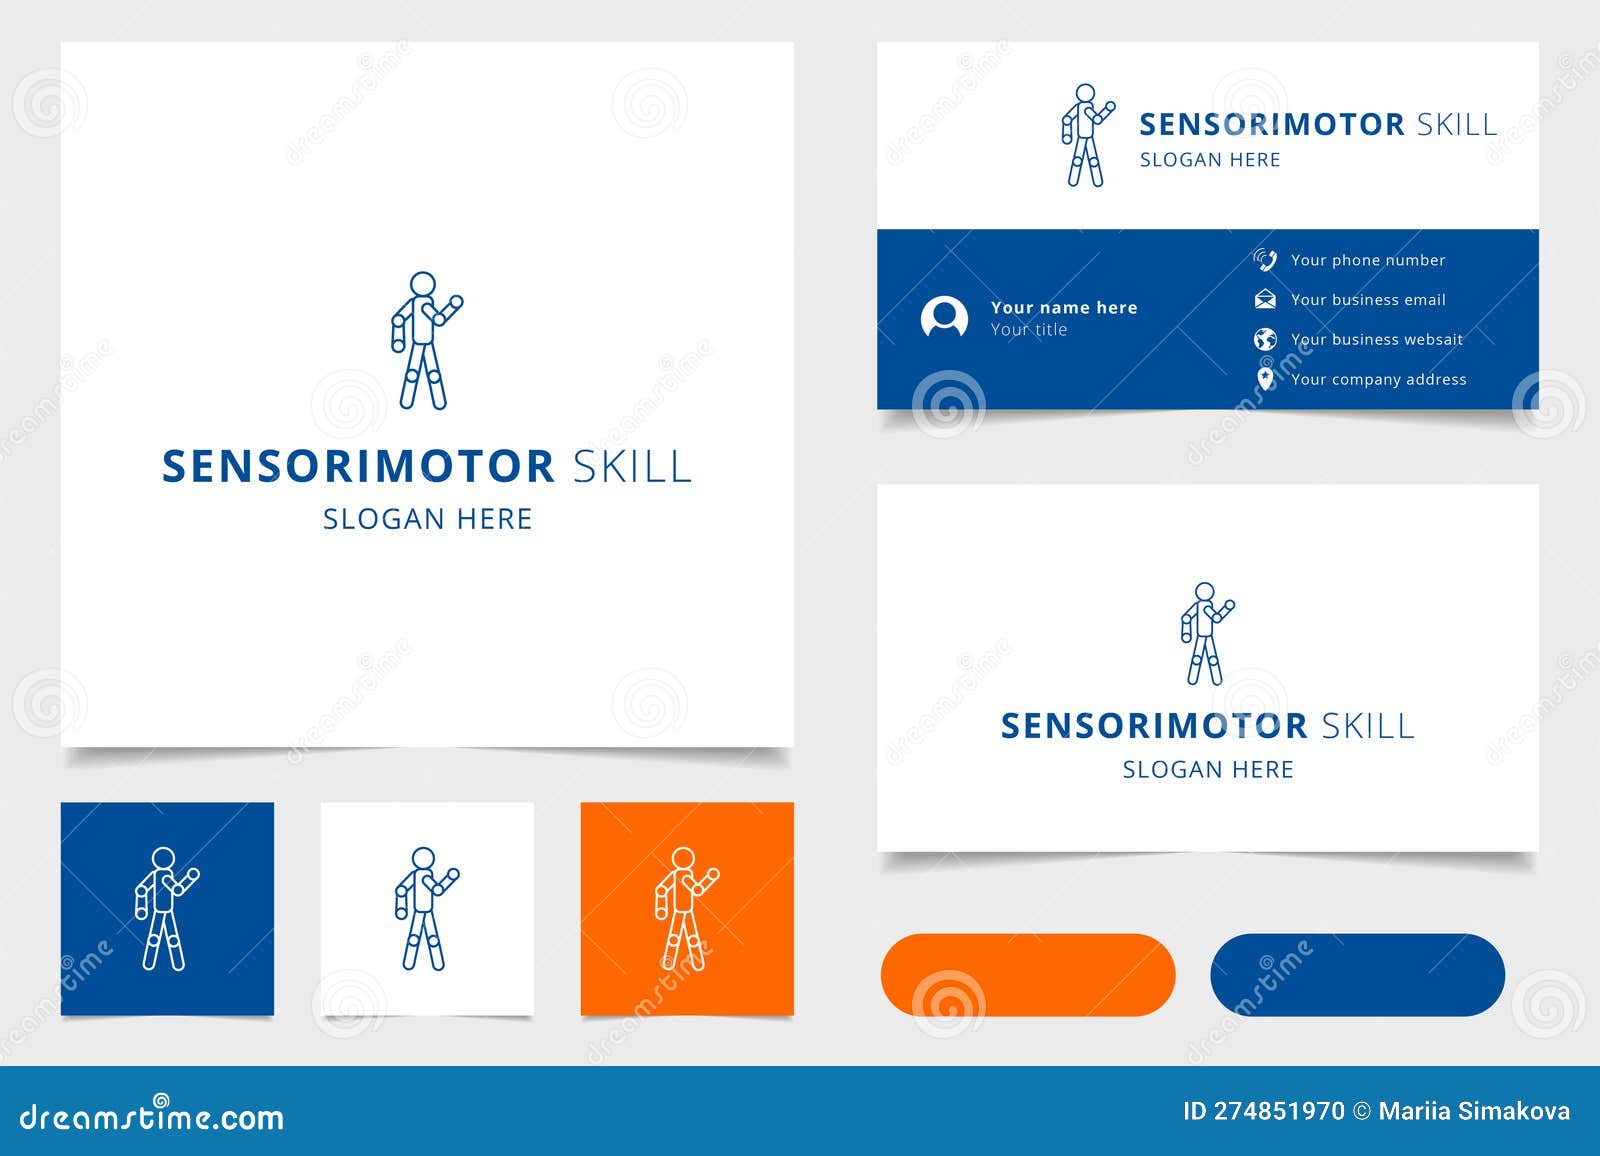 sensorimotor skill logo  with editable slogan. branding book and business card template.